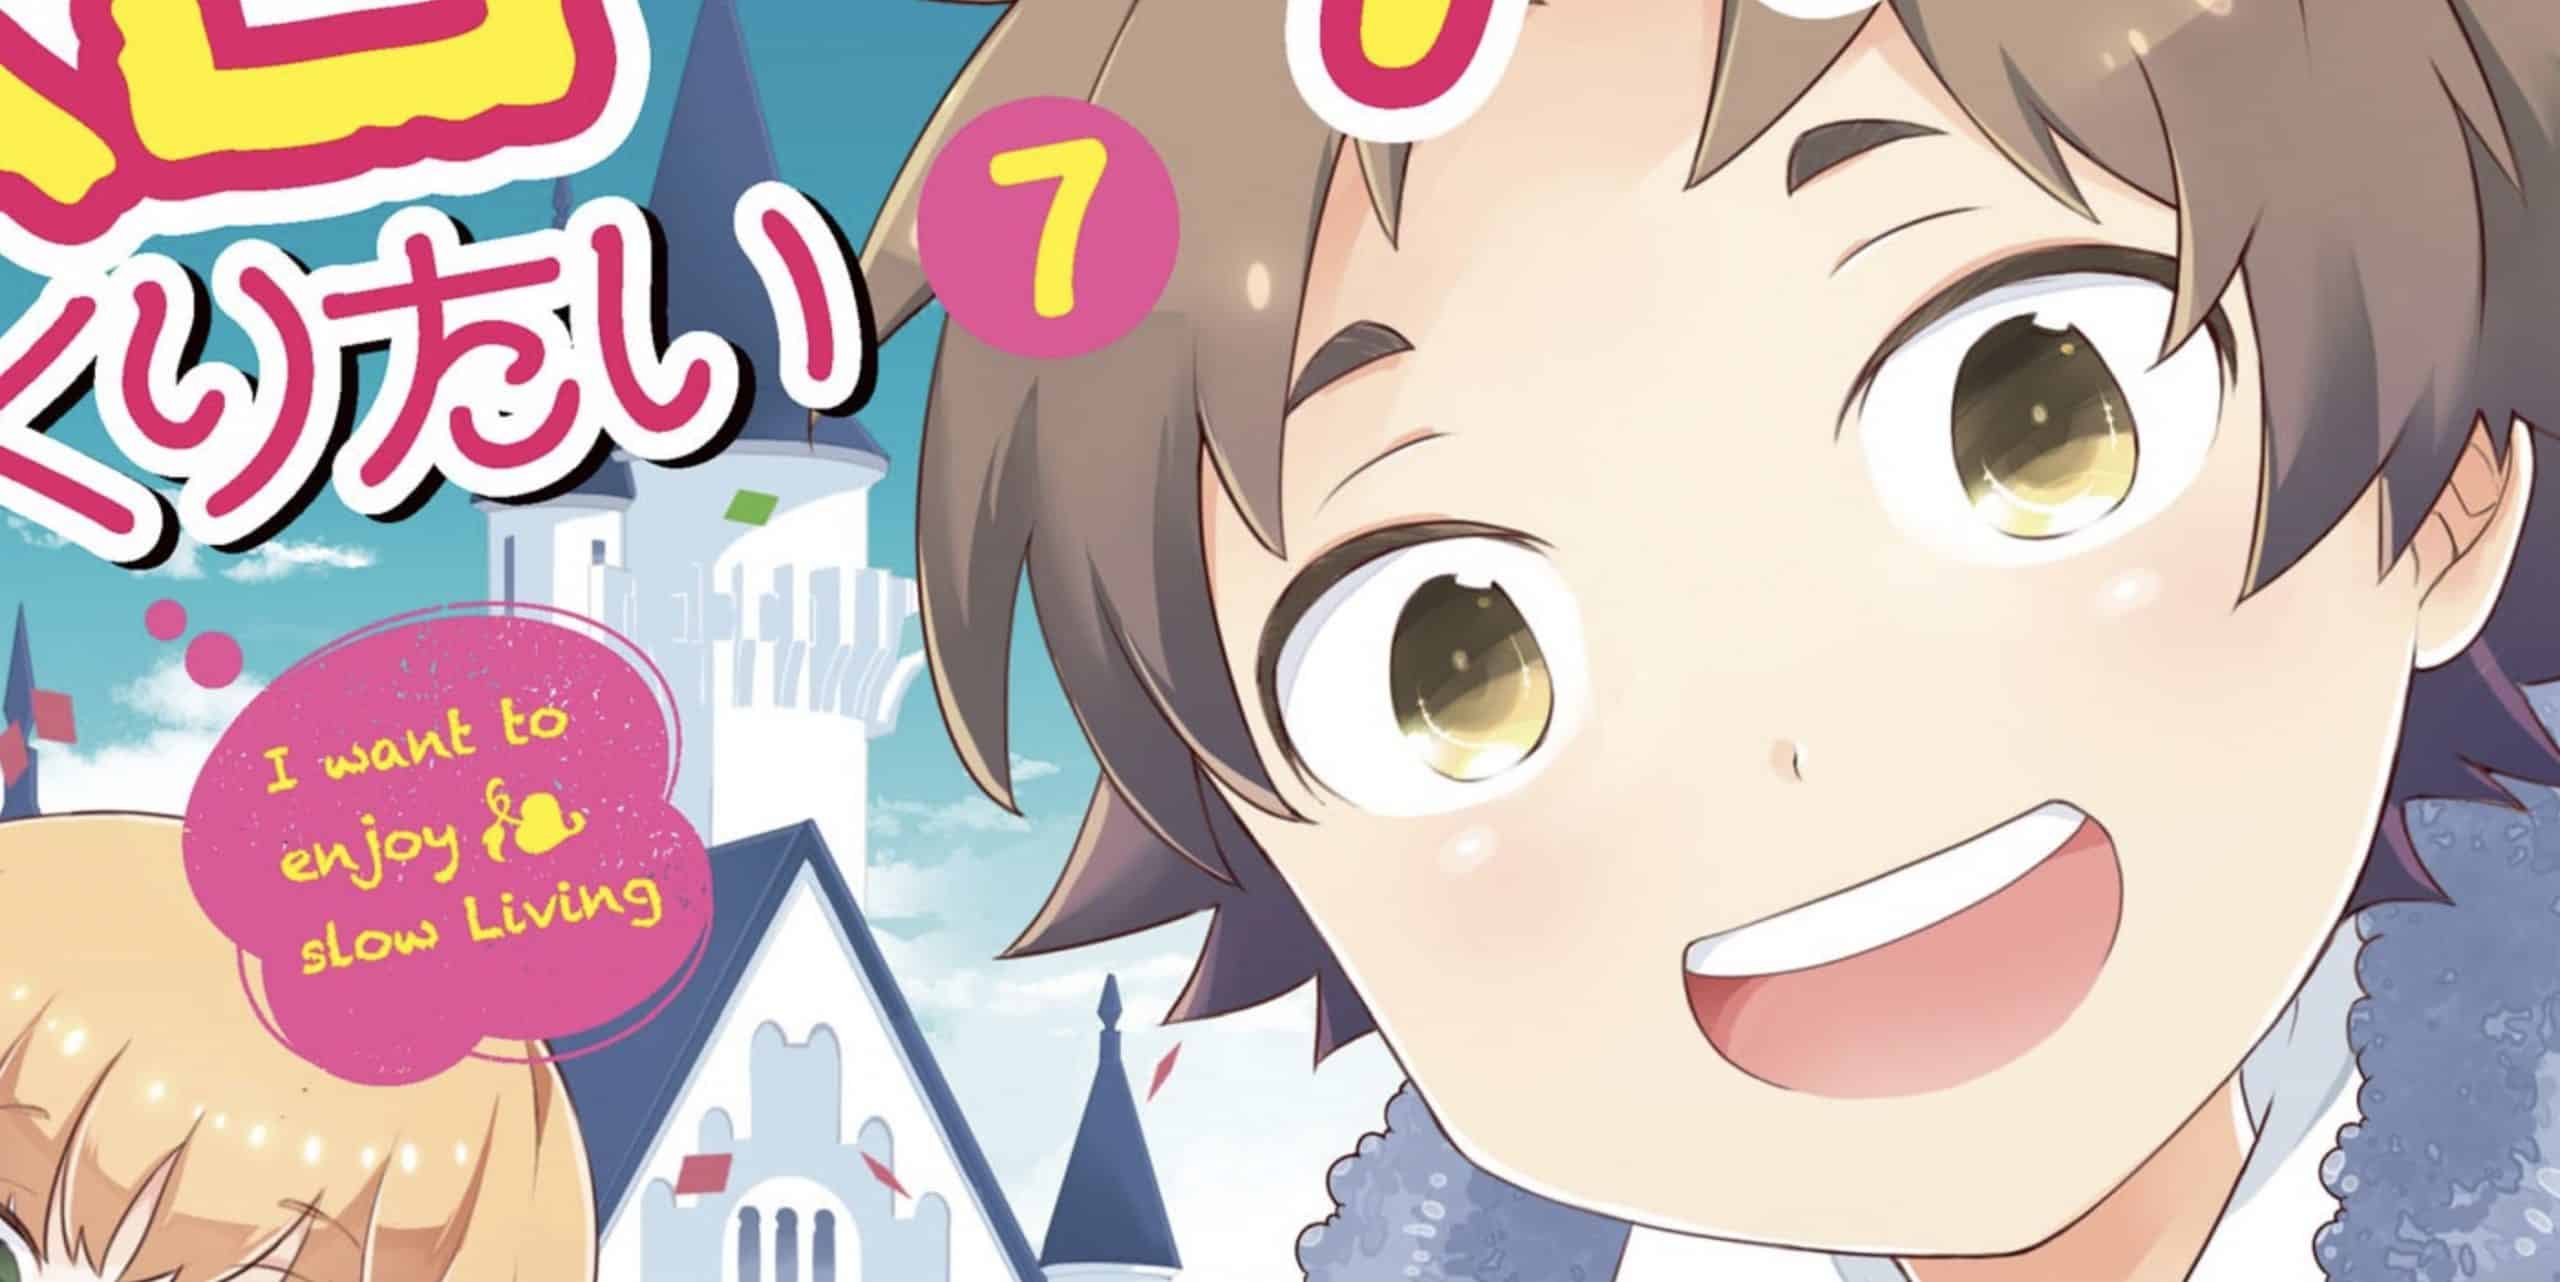 Tensei Shite Inaka de Slowlife wo Okuritai chapter 64 release date